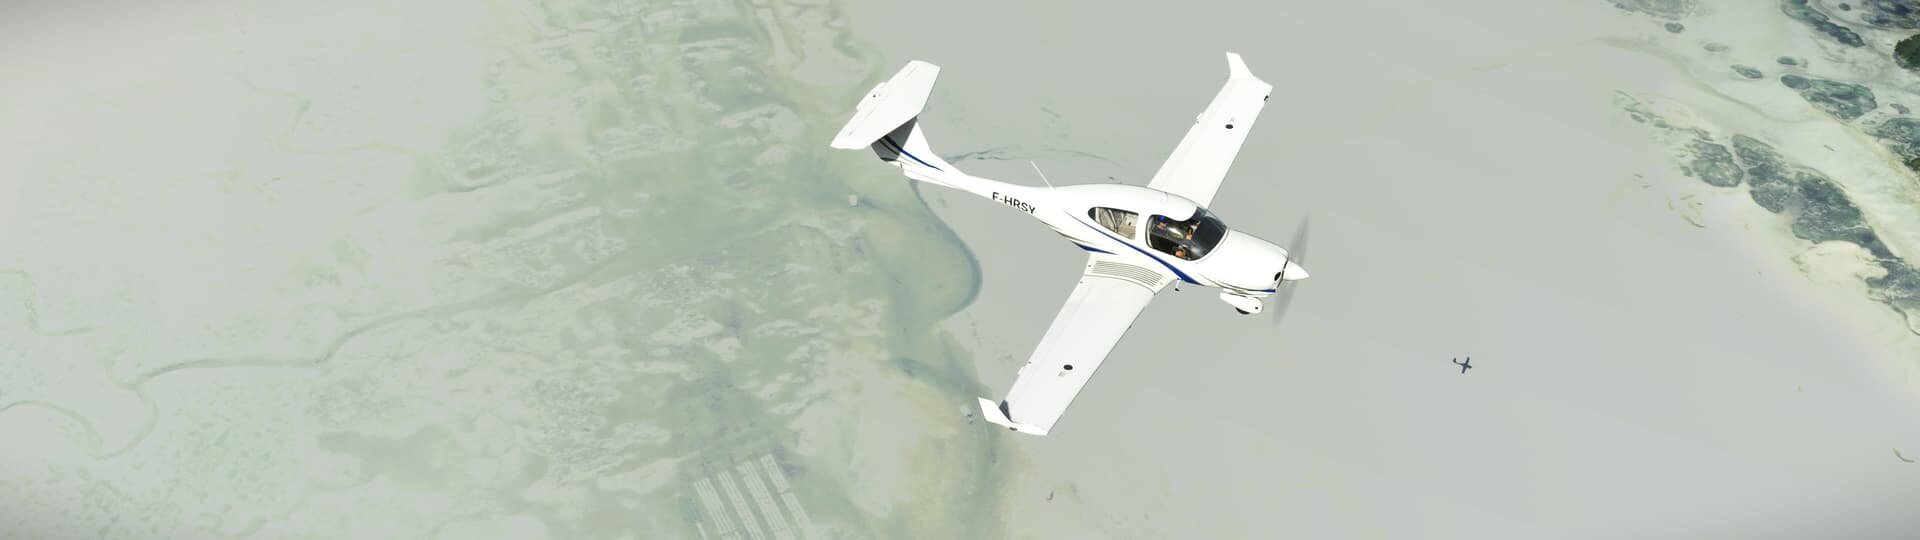 http://image.noelshack.com/fichiers/2023/26/3/1687936128-microsoft-flight-simulator-screenshot-2023-06-06-11-31-56-100-1.jpg